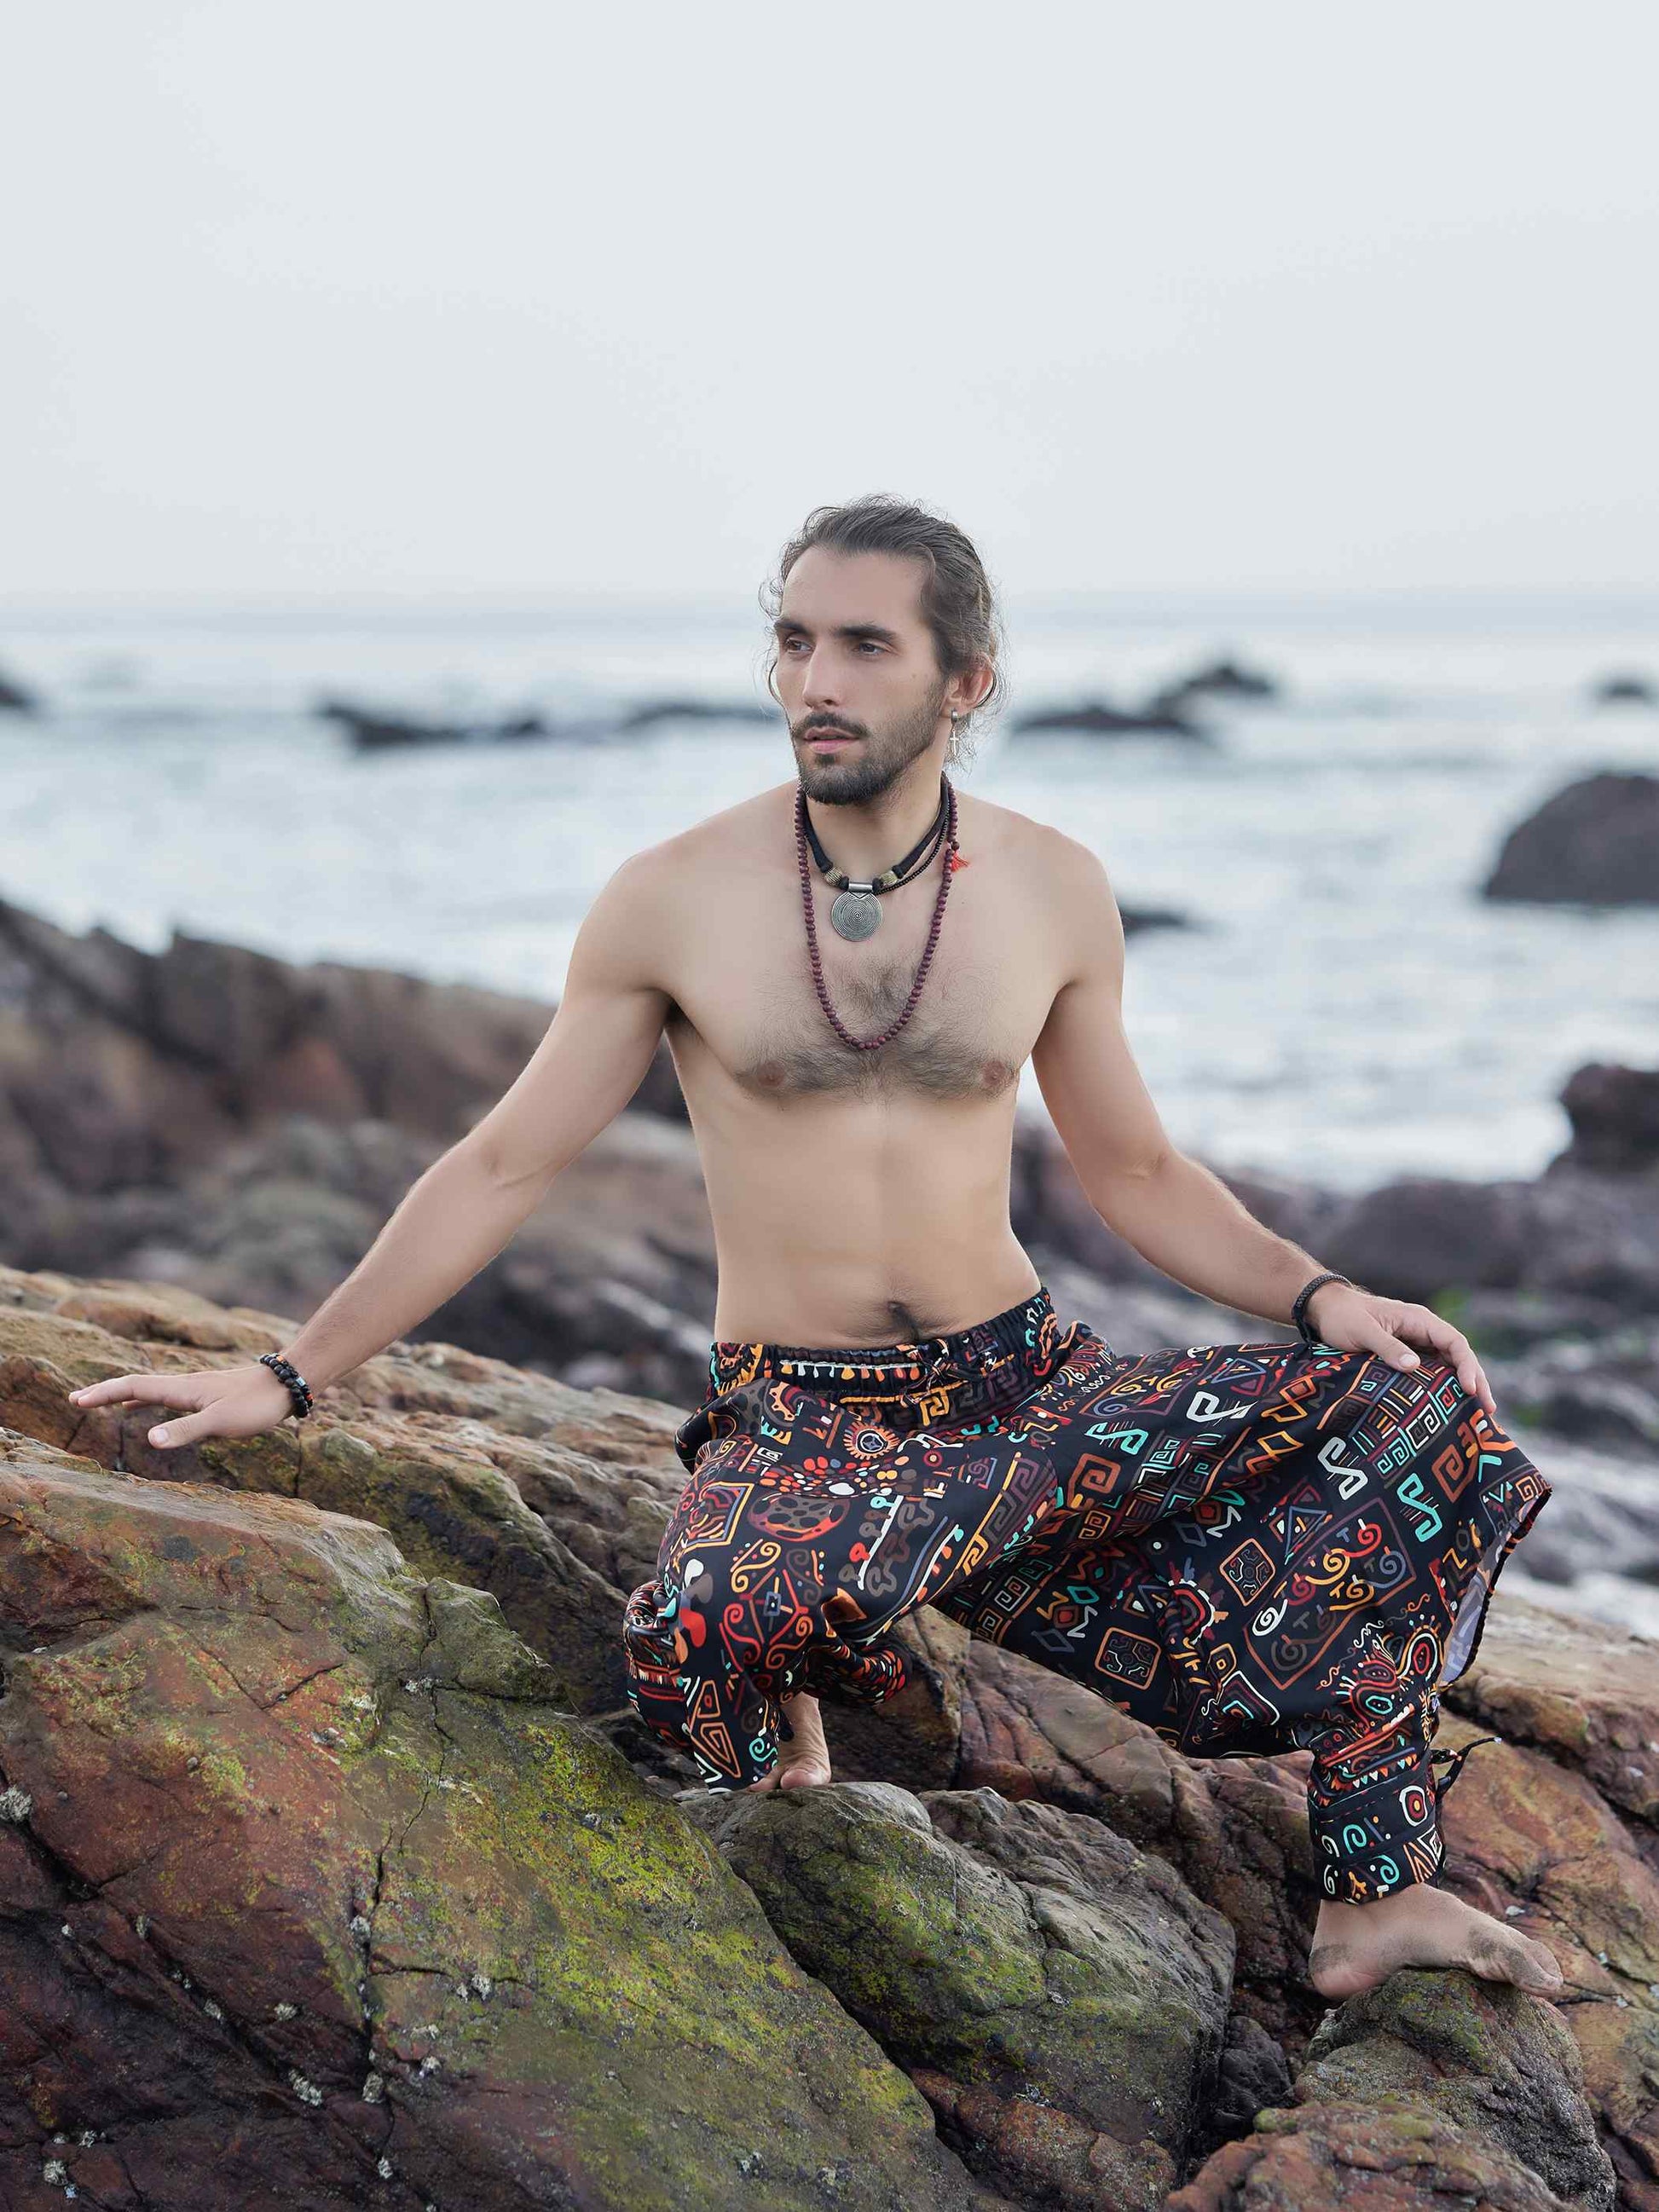 Buy Men's Flowy Graphic Printed Hippy Harem Pants For Travel Yoga